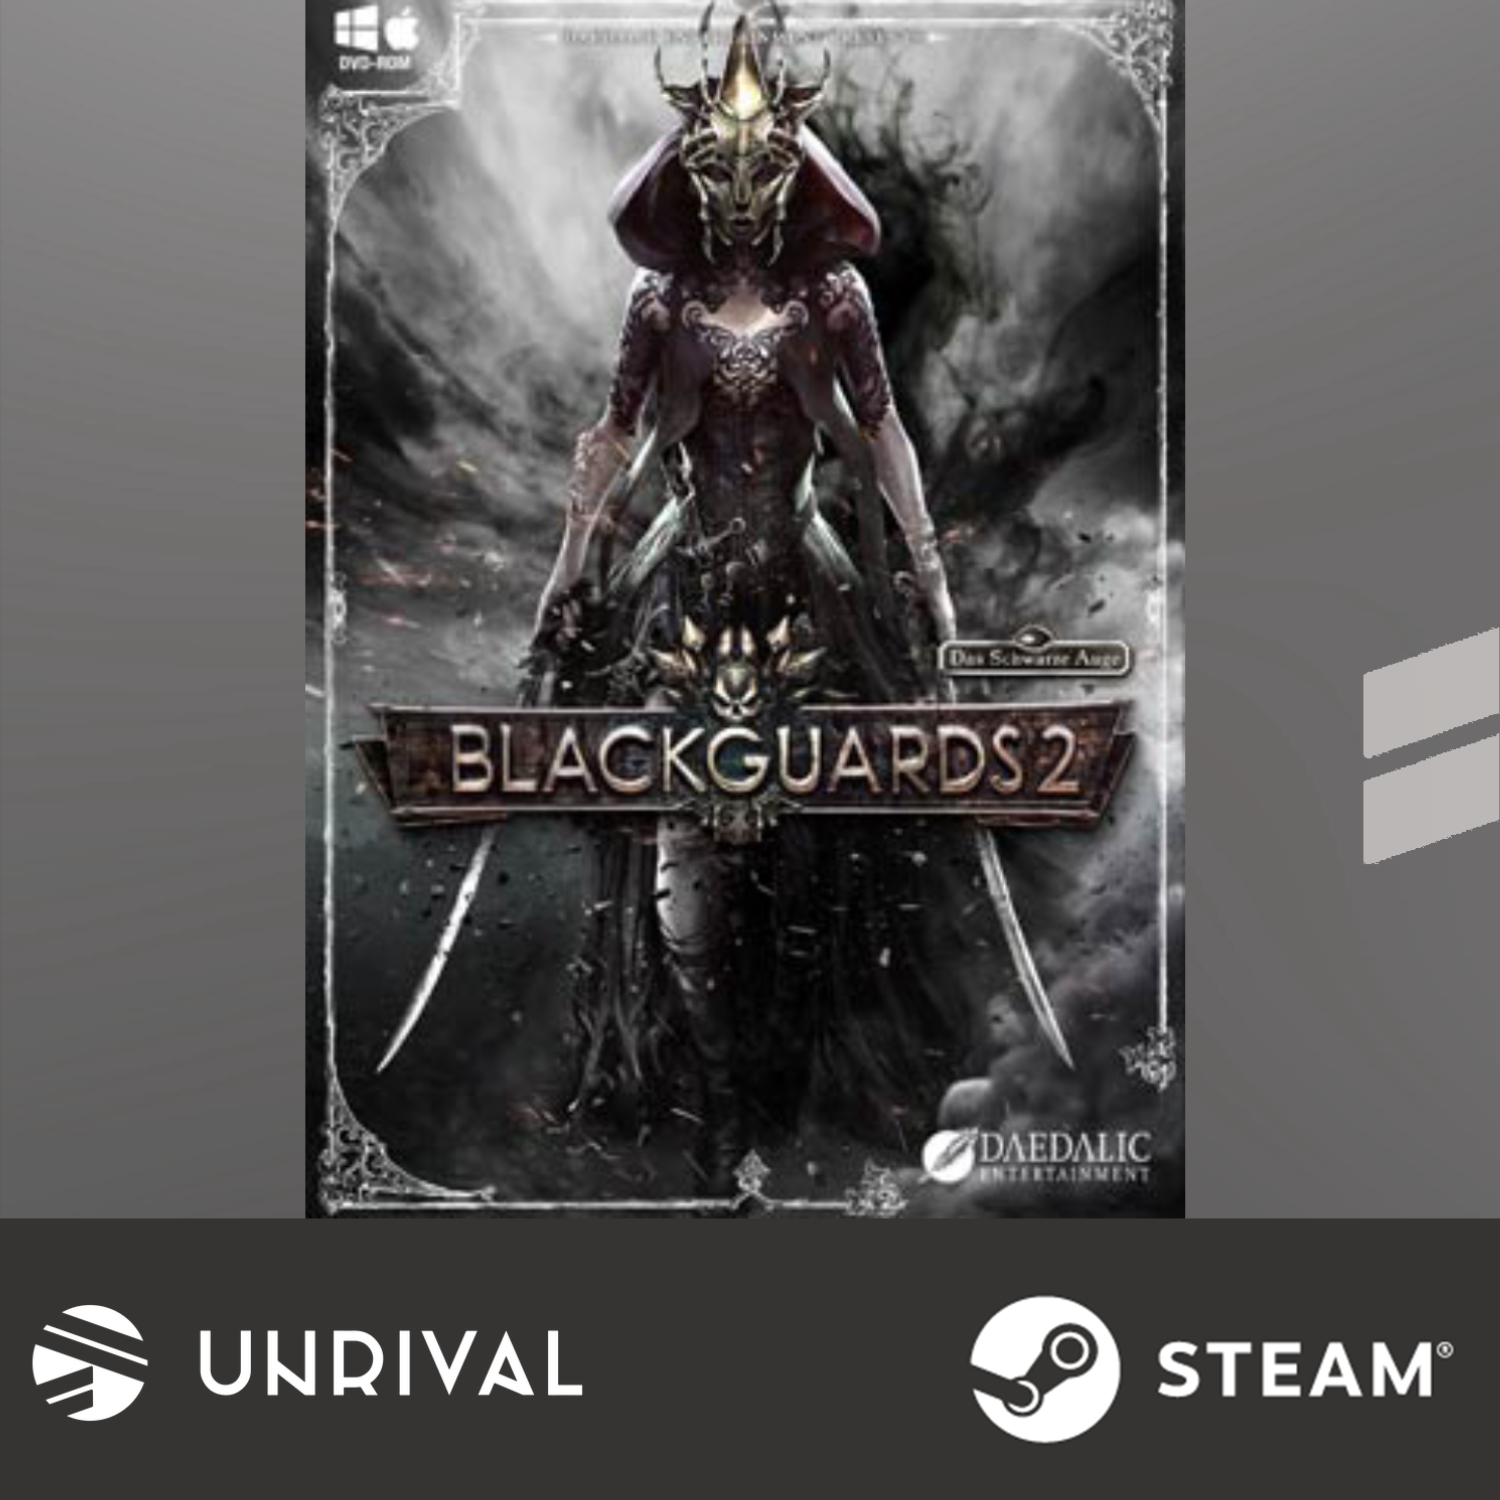 [Hot Sale] Blackguards 2 PC Digital Download Game (Single Player) - Unrival